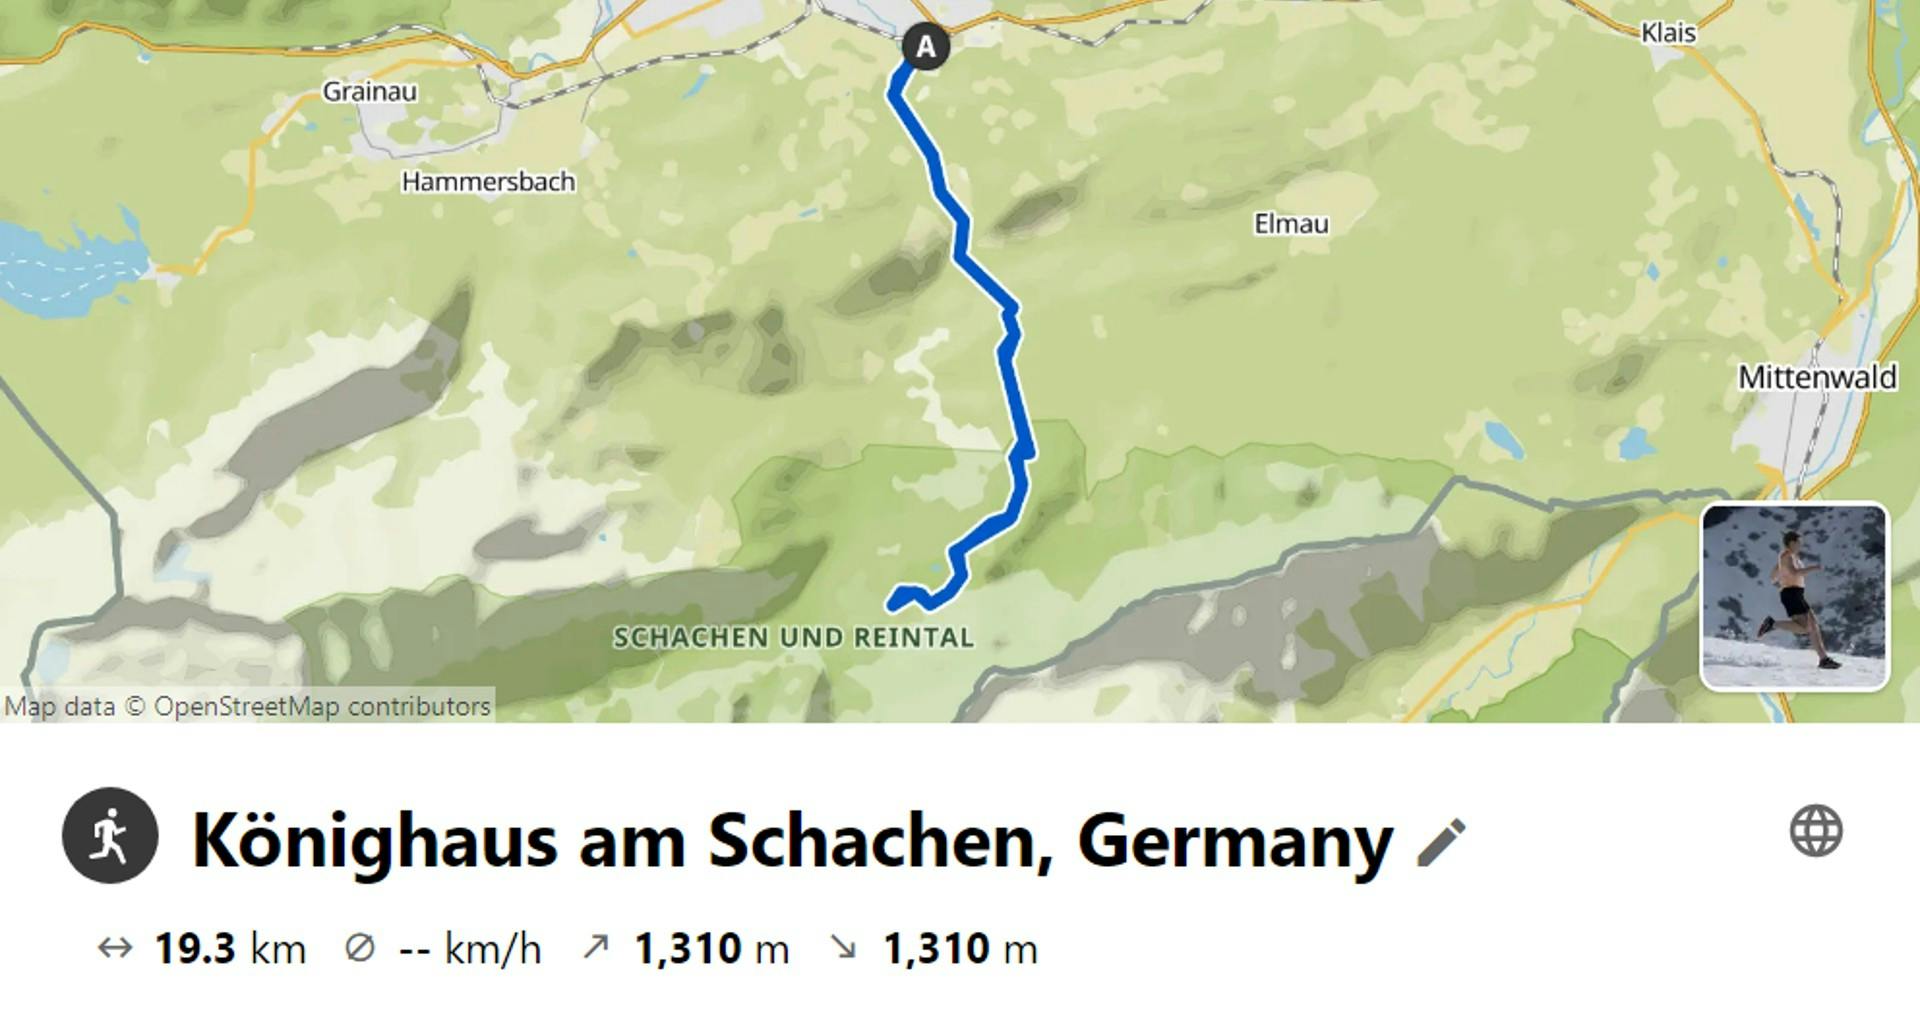 merrell-trails-of-europe-konighaus-am-schachen-germany